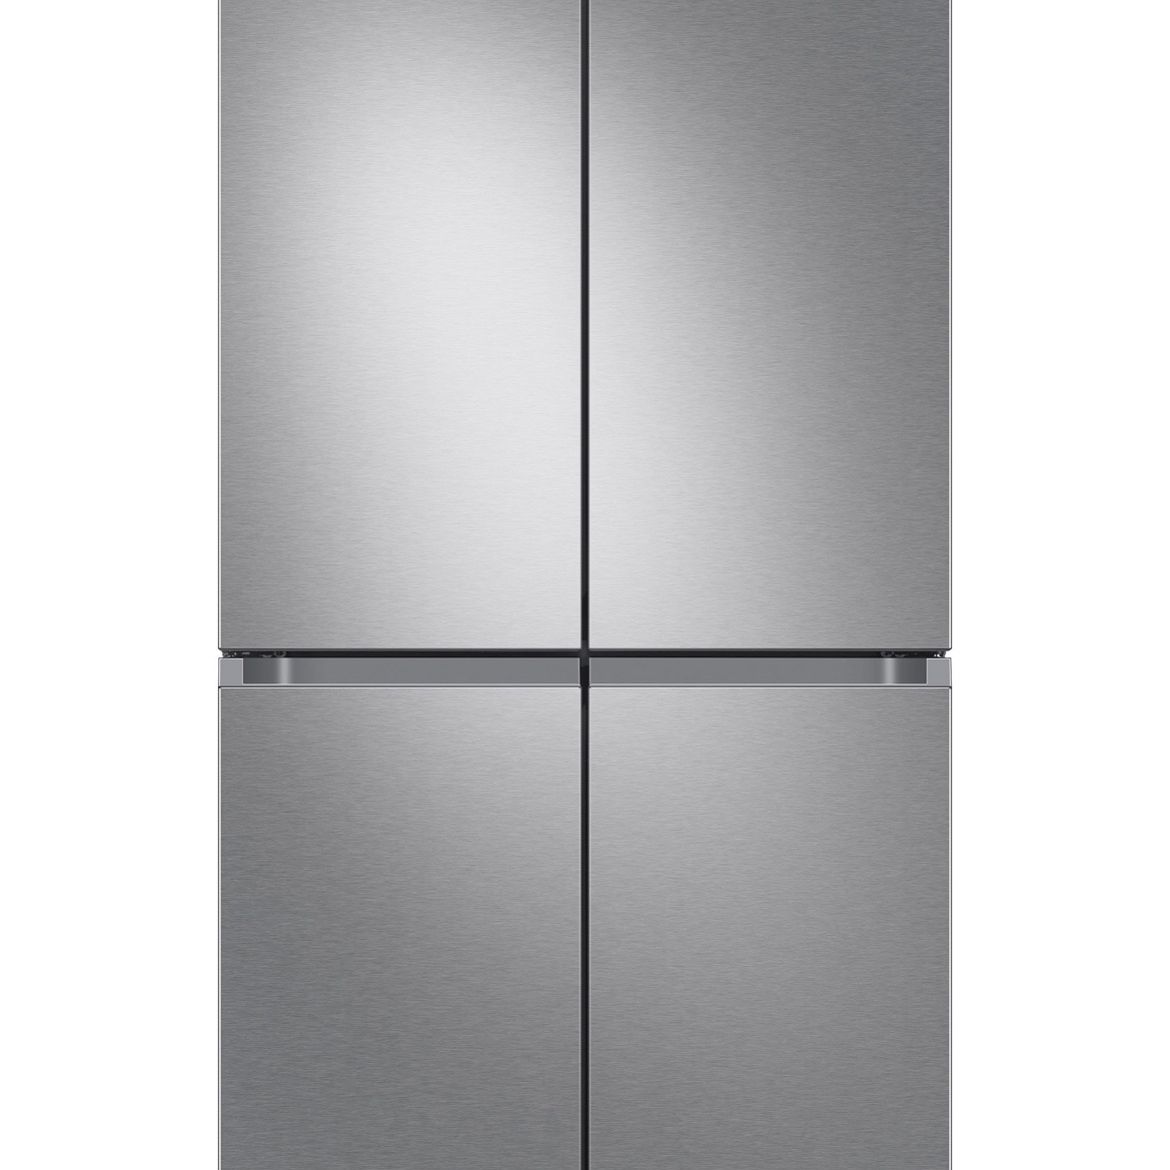 Samsung - 29 cu. ft. 4-Door Flex™ French Door Refrigerator with WiFi, AutoFill Water Pitcher & Dual Ice Maker - Stainless steel